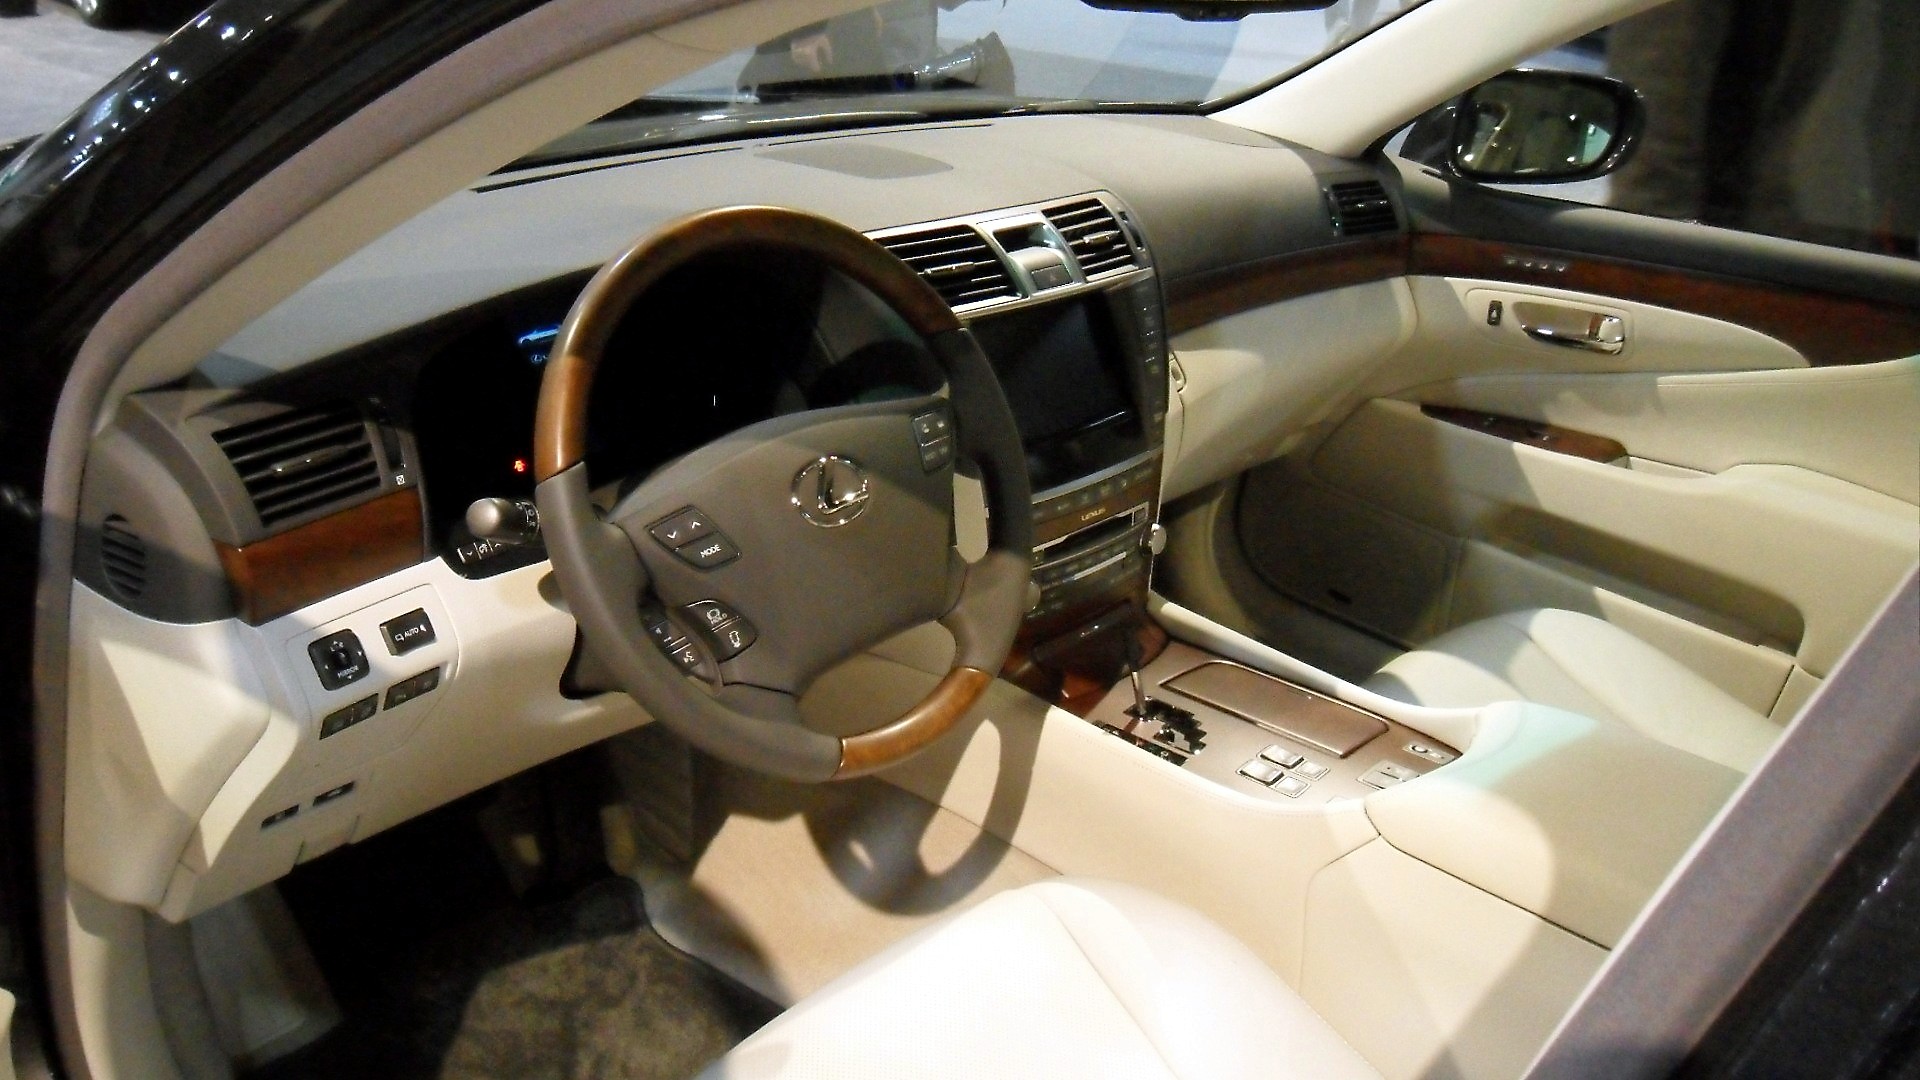 File:2010 Lexus LS460 Interior.jpg - Wikimedia Commons